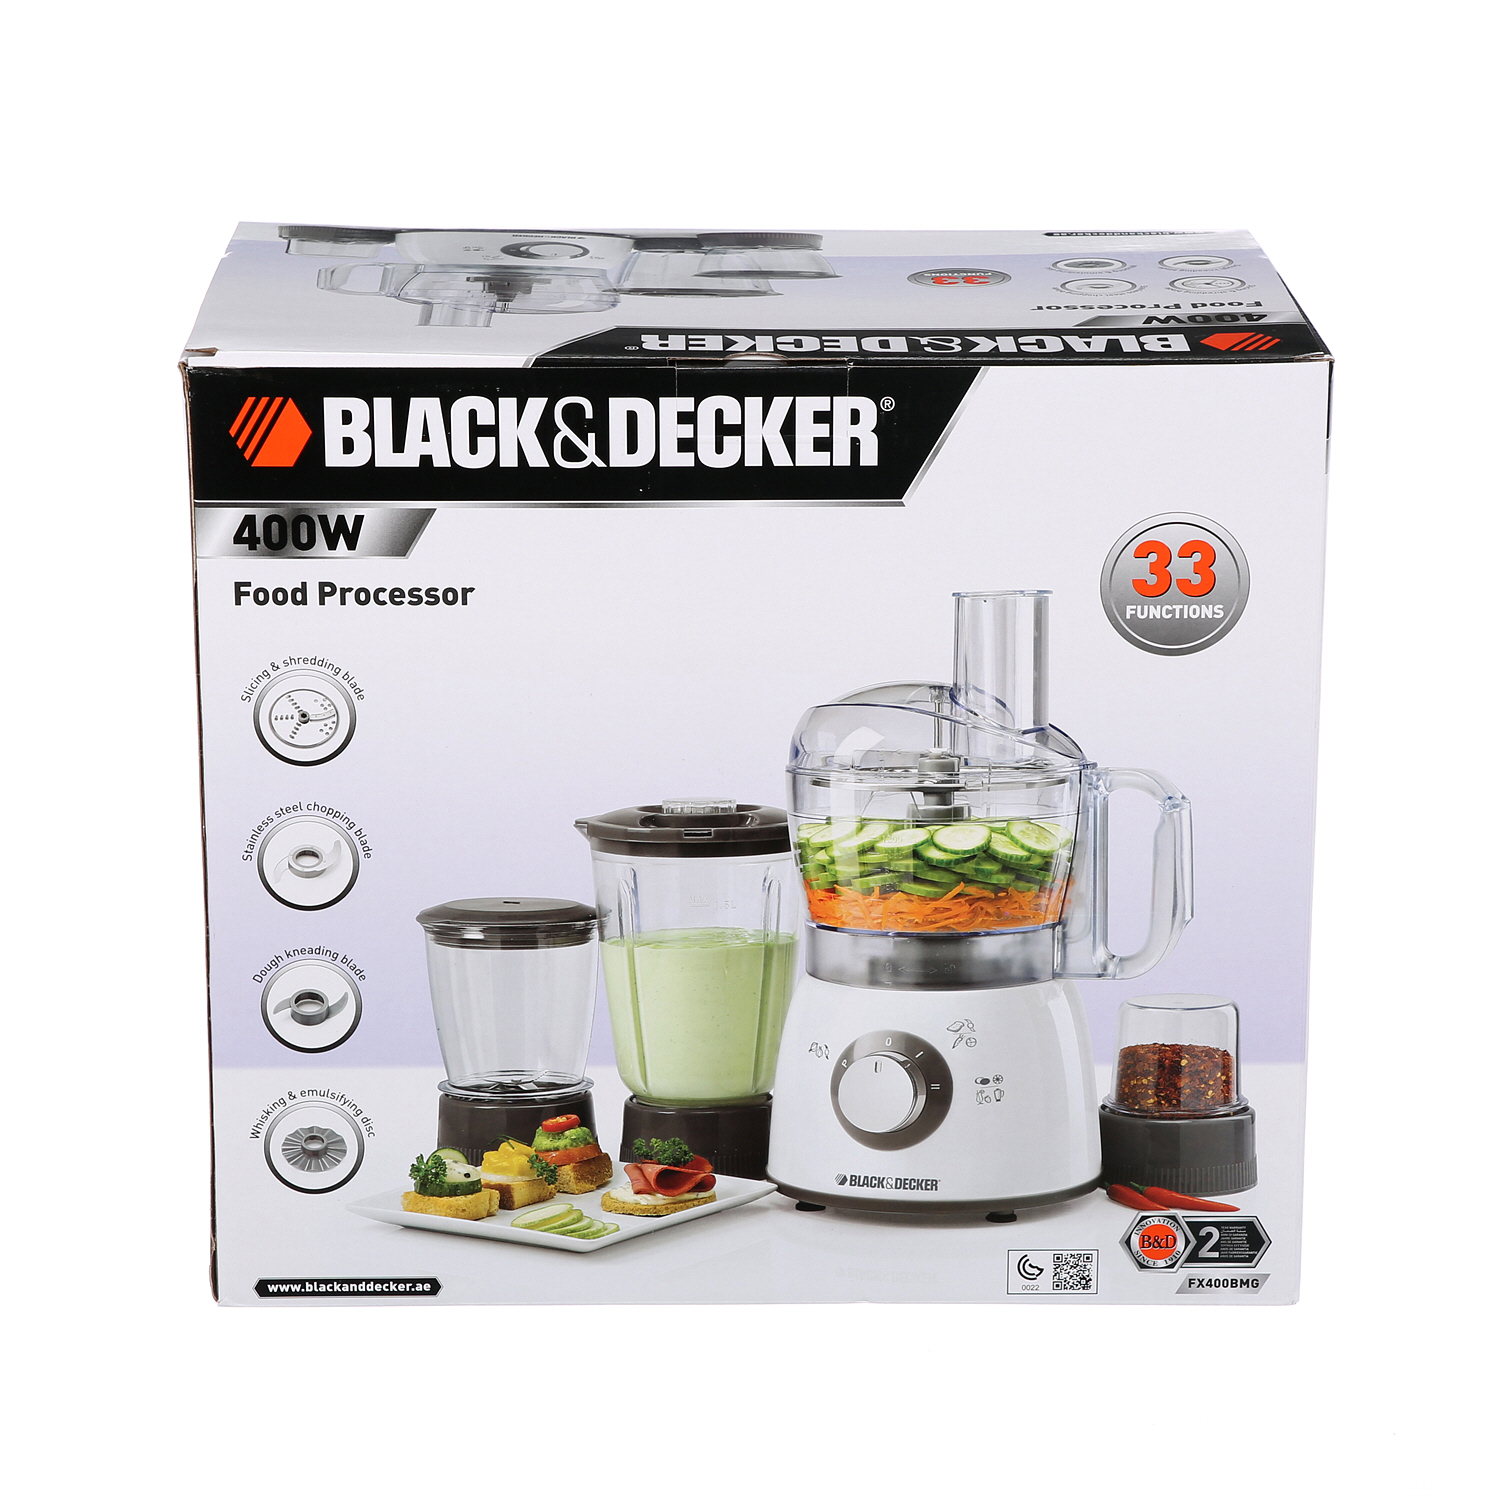 Black & Decker 33 Function Food Procesor